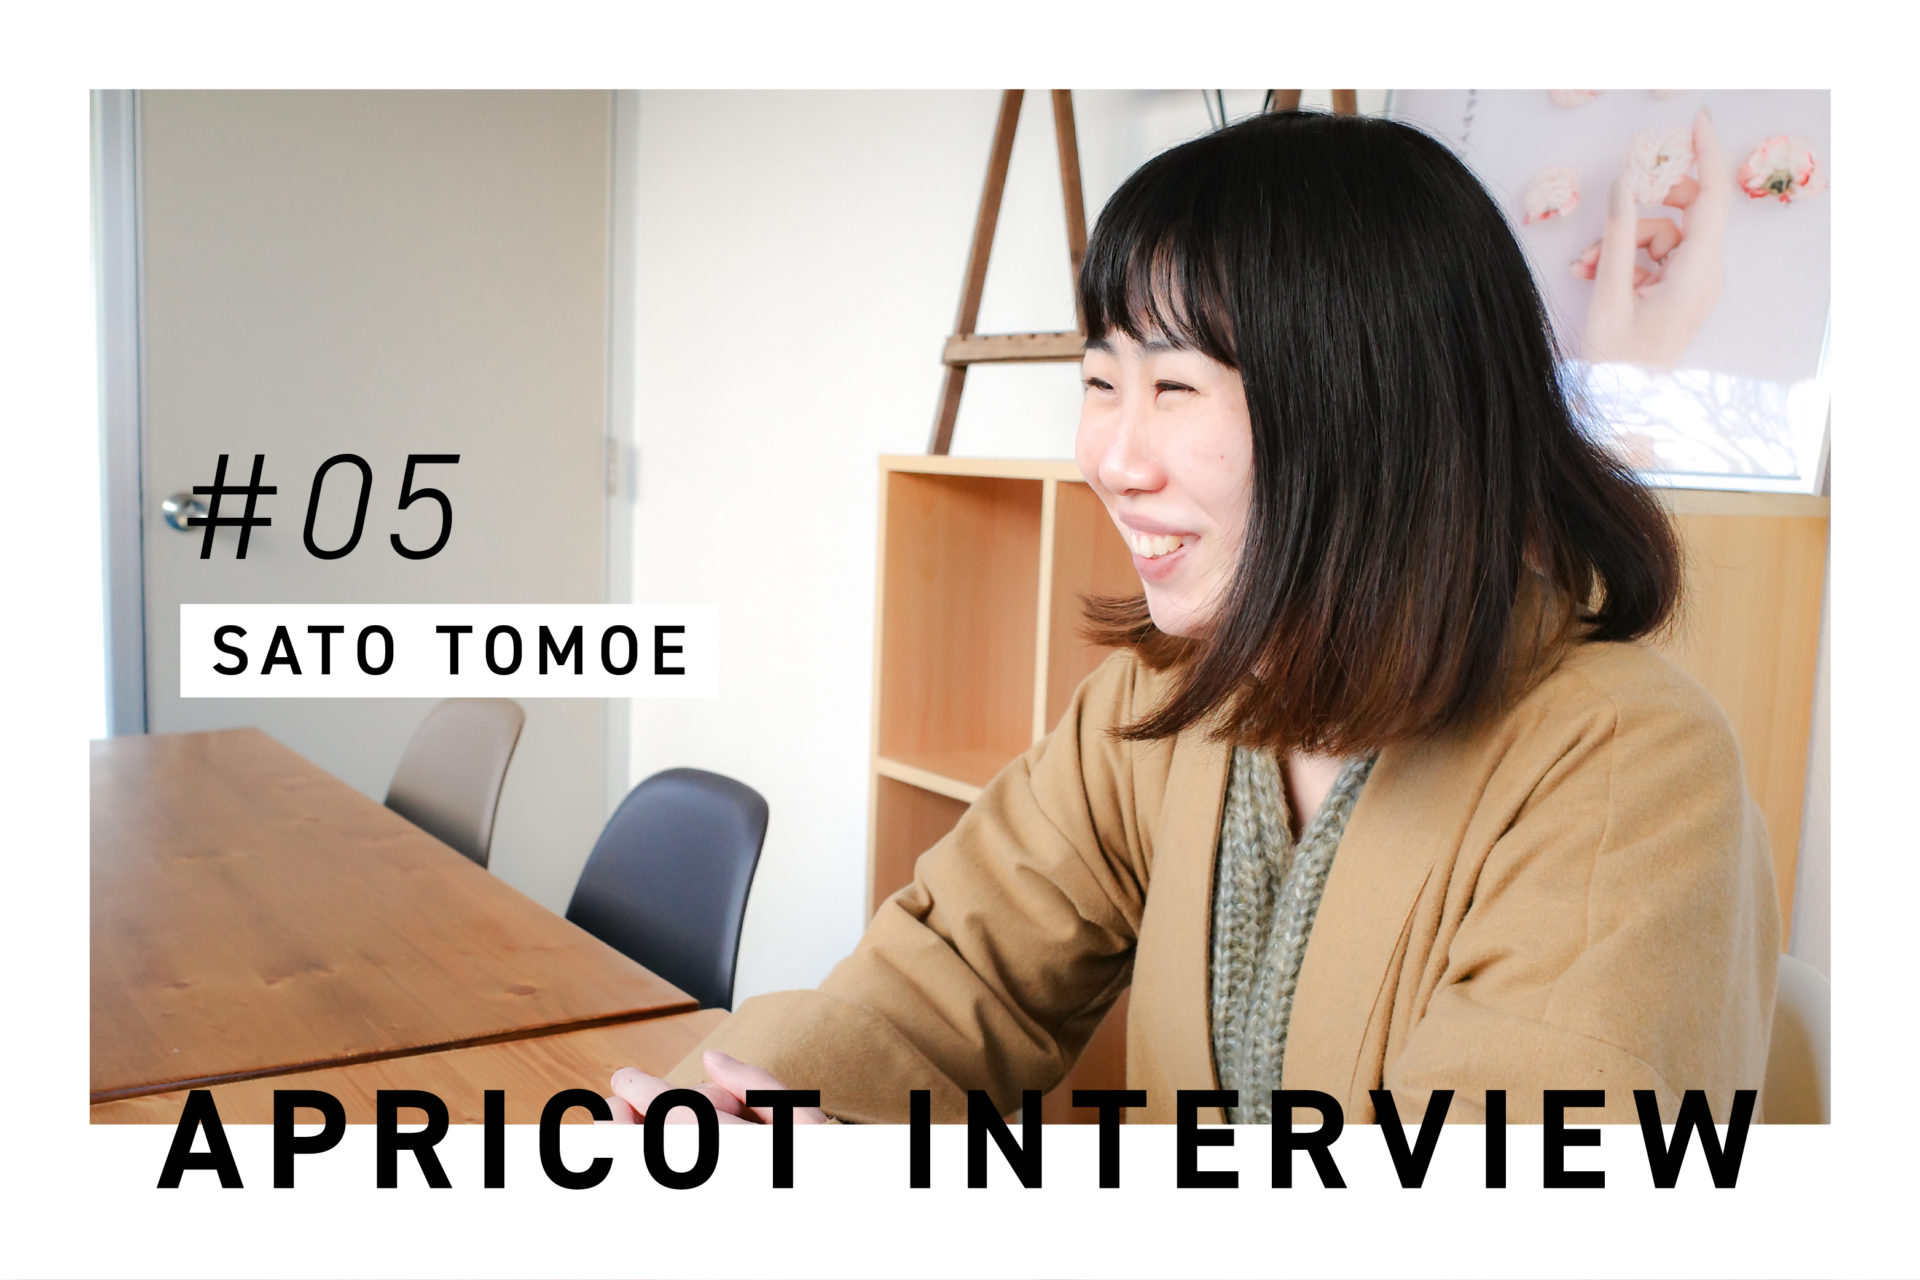 #05  APRICOT INTERVIEW  bySato Tomoe